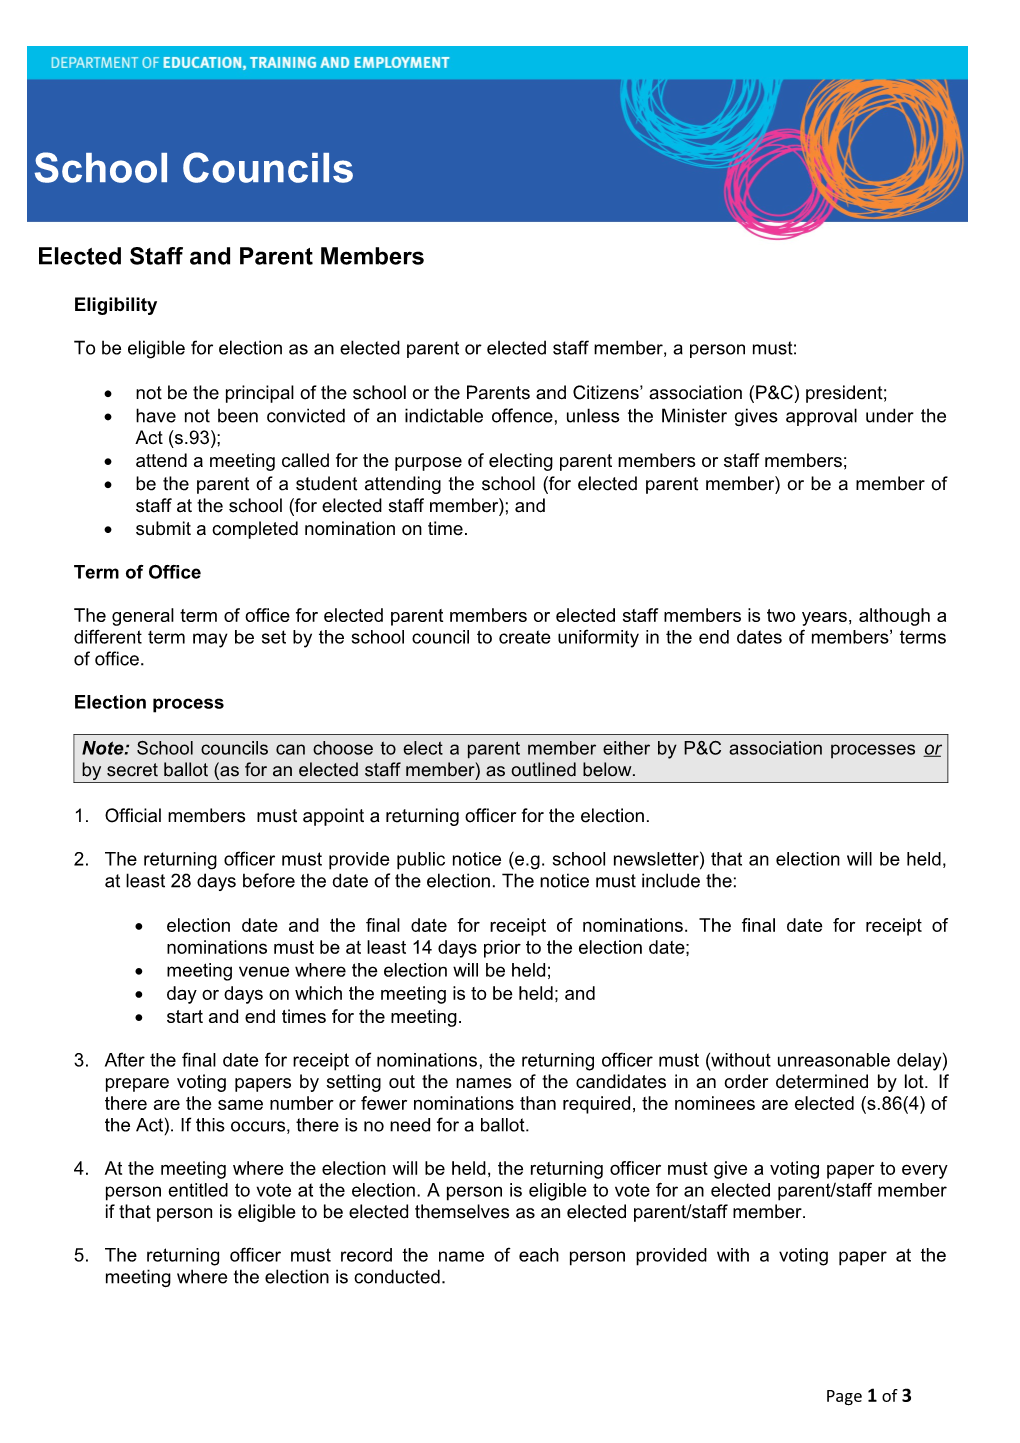 IPS - Elected Parent / Staff Members - Fact Sheet